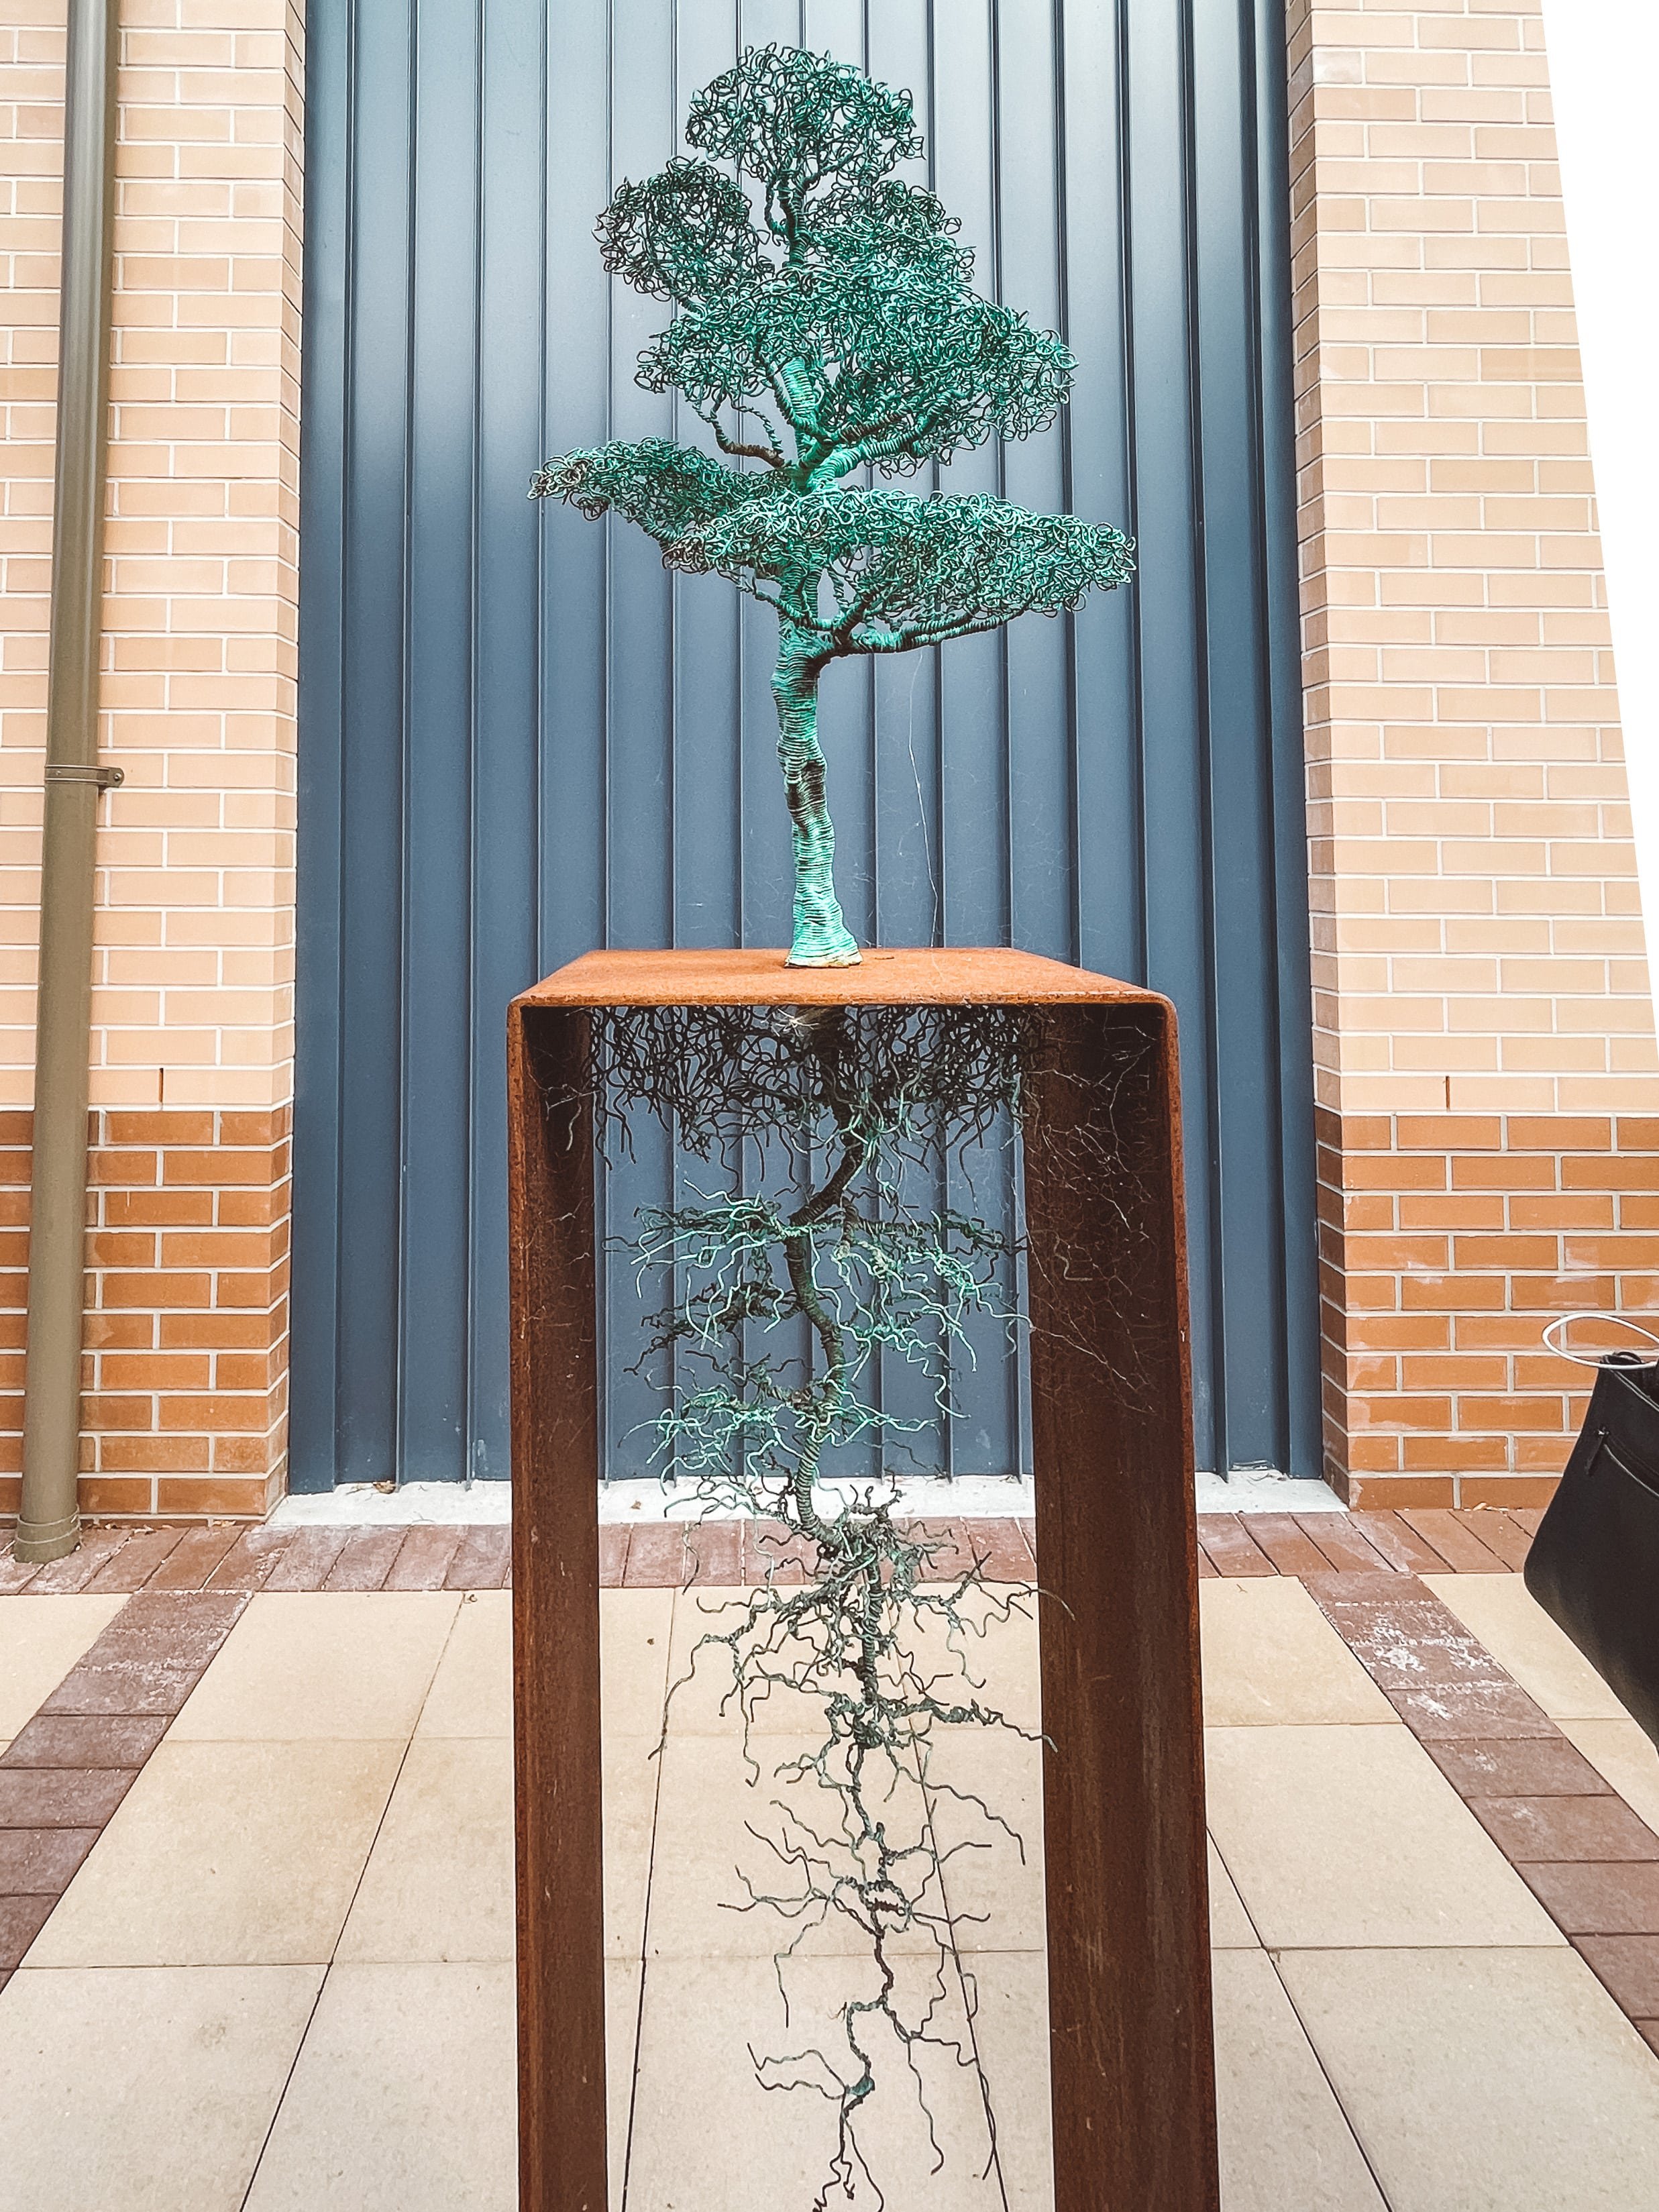 Tree sculpture in the garden - Art Gallery - Grafton - New South Wales (NSW) - Australia